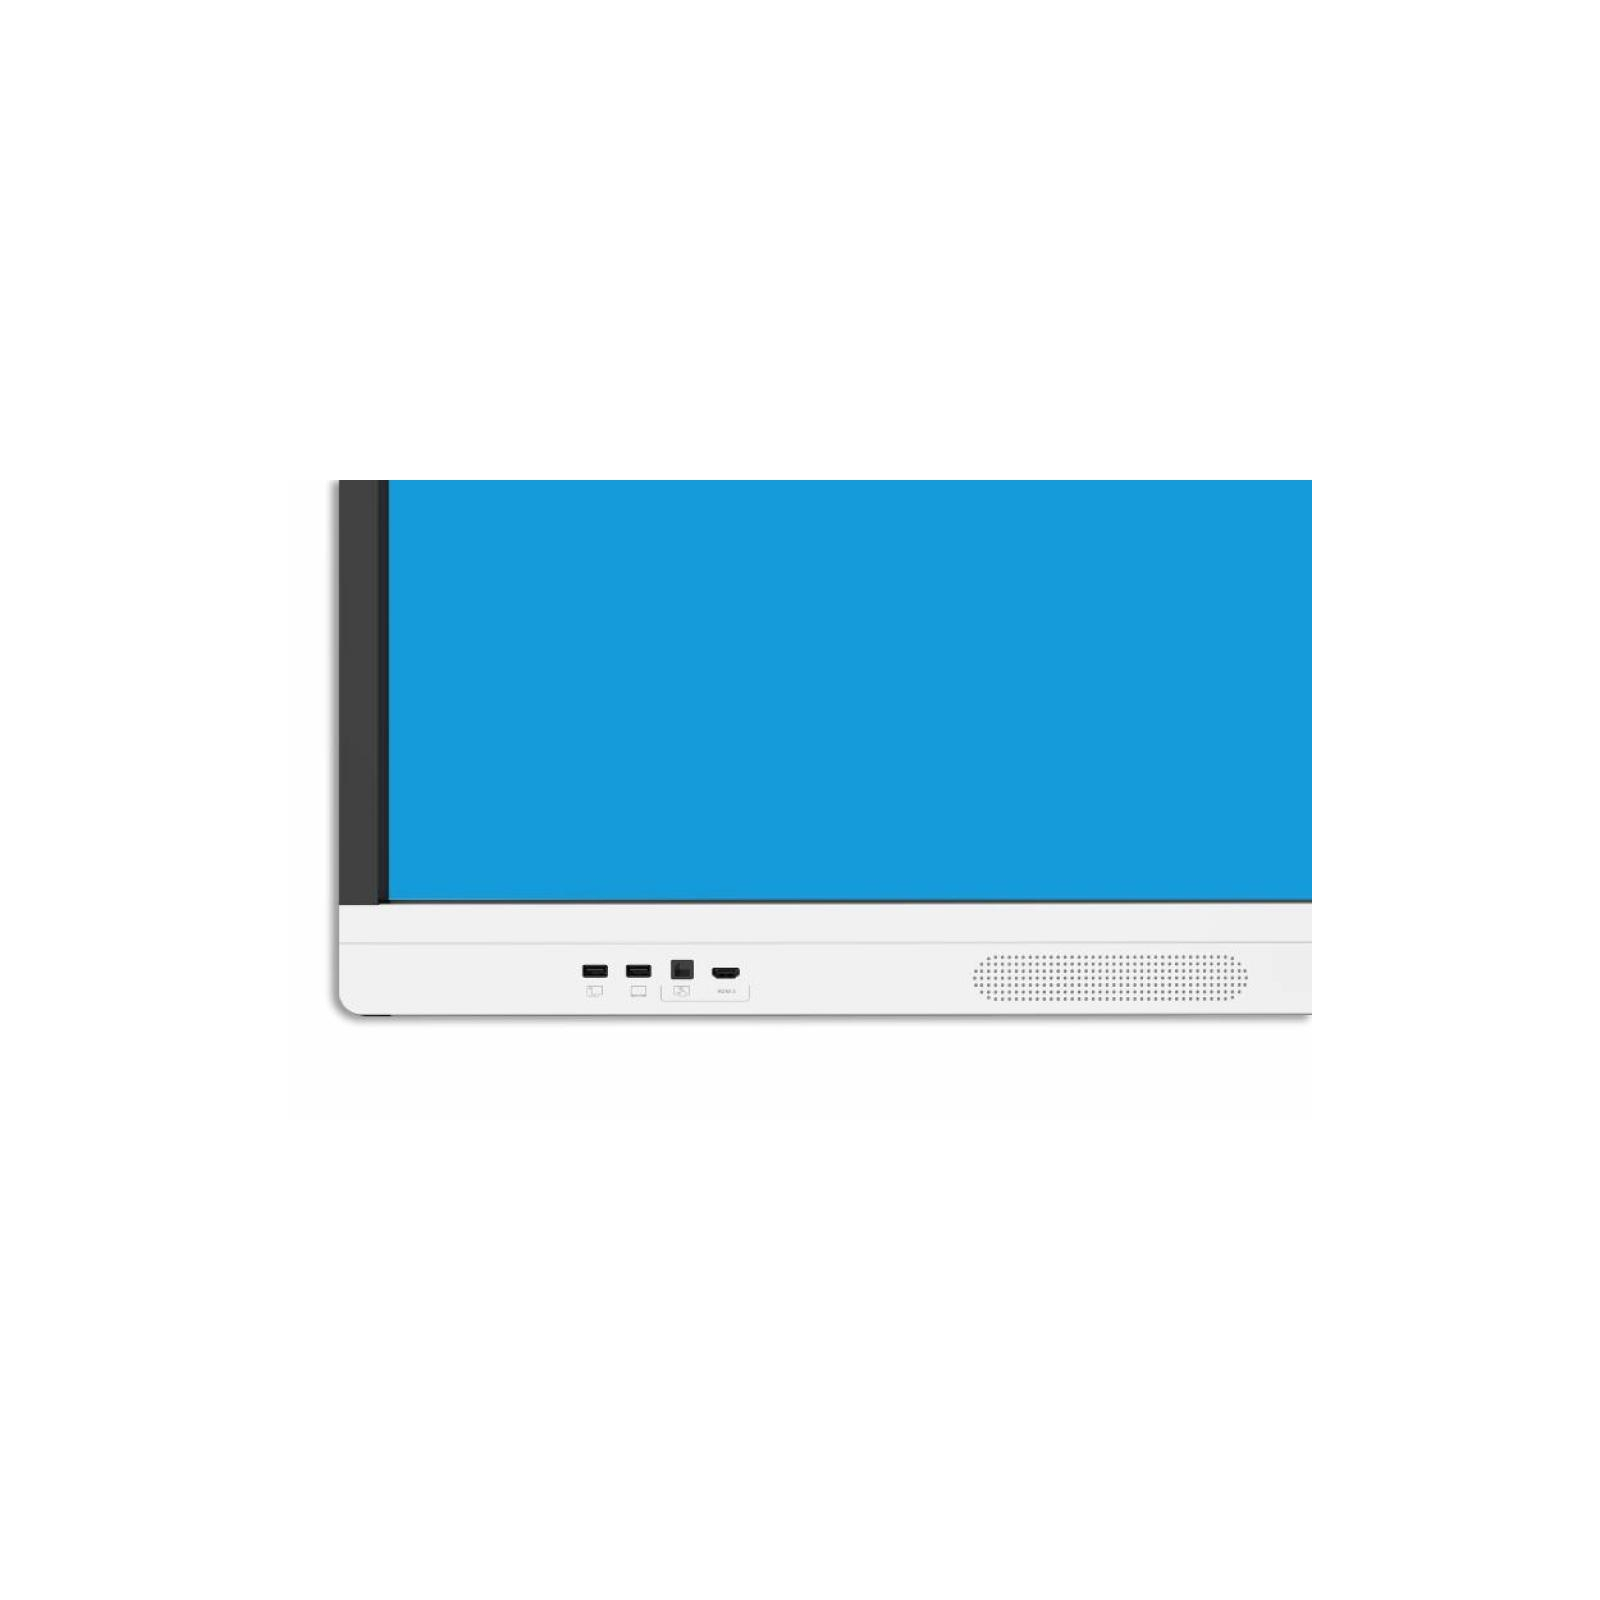 LCD панель Smart SBID-MX286-V4 изображение 4